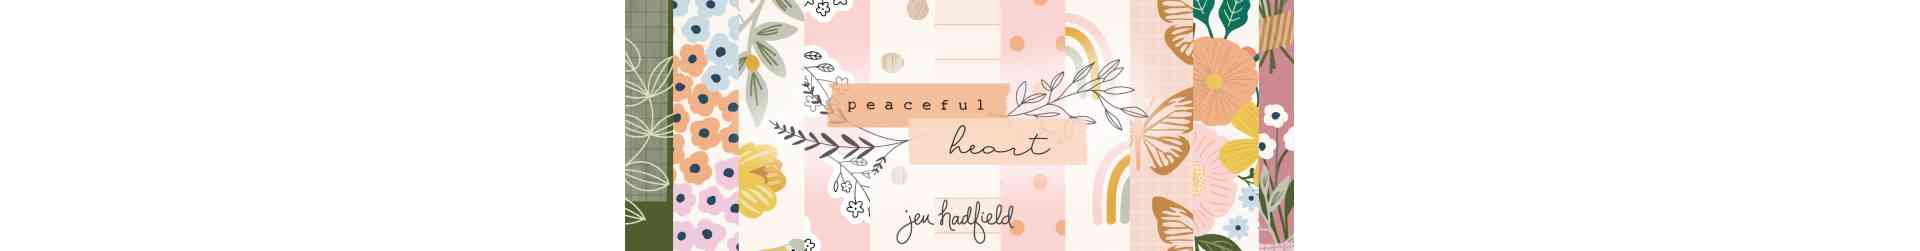 JH Peaceful Heart